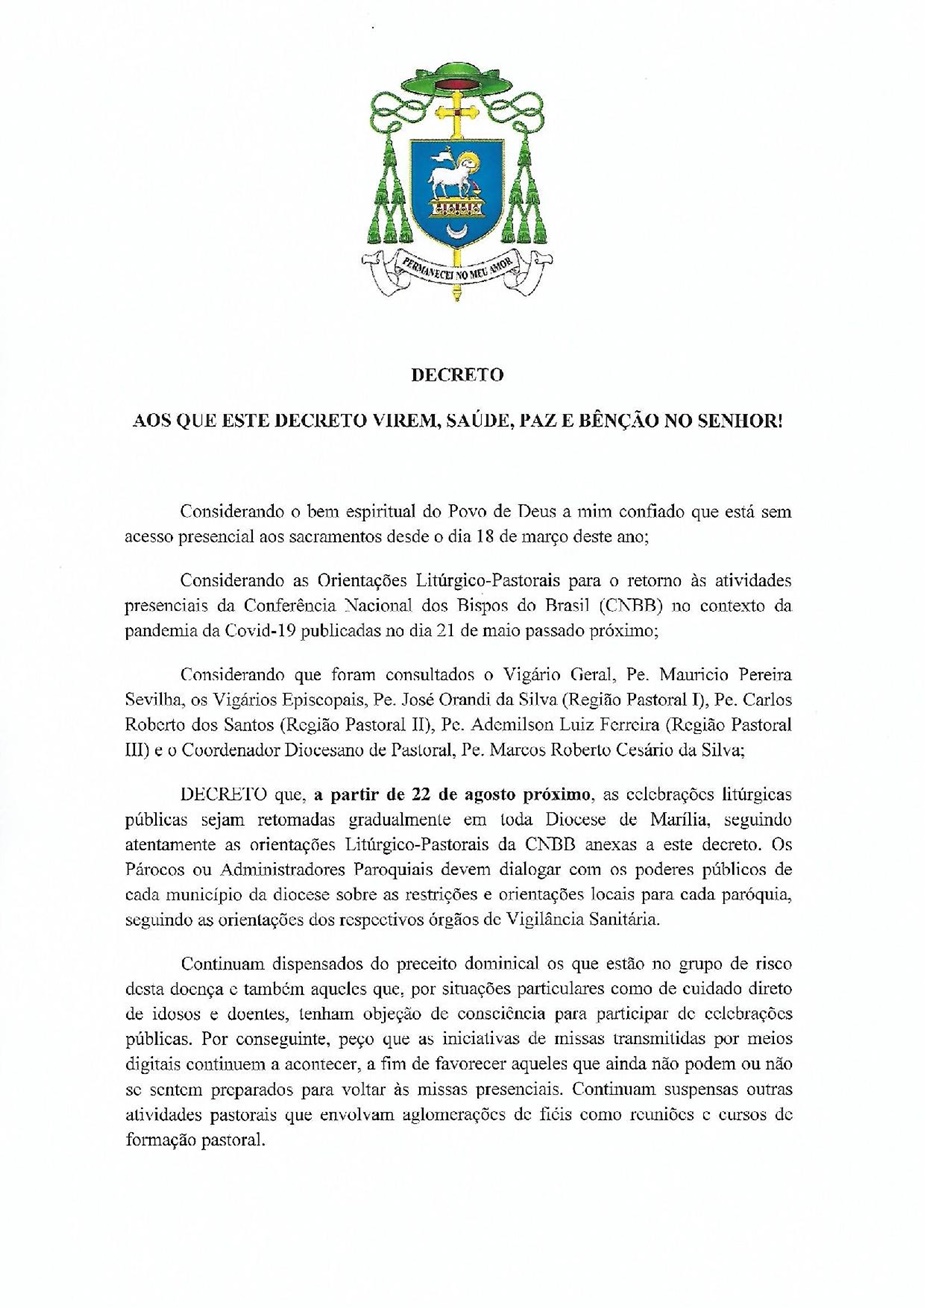 Decreto de 31072020 da Diocese de Marlia/SP